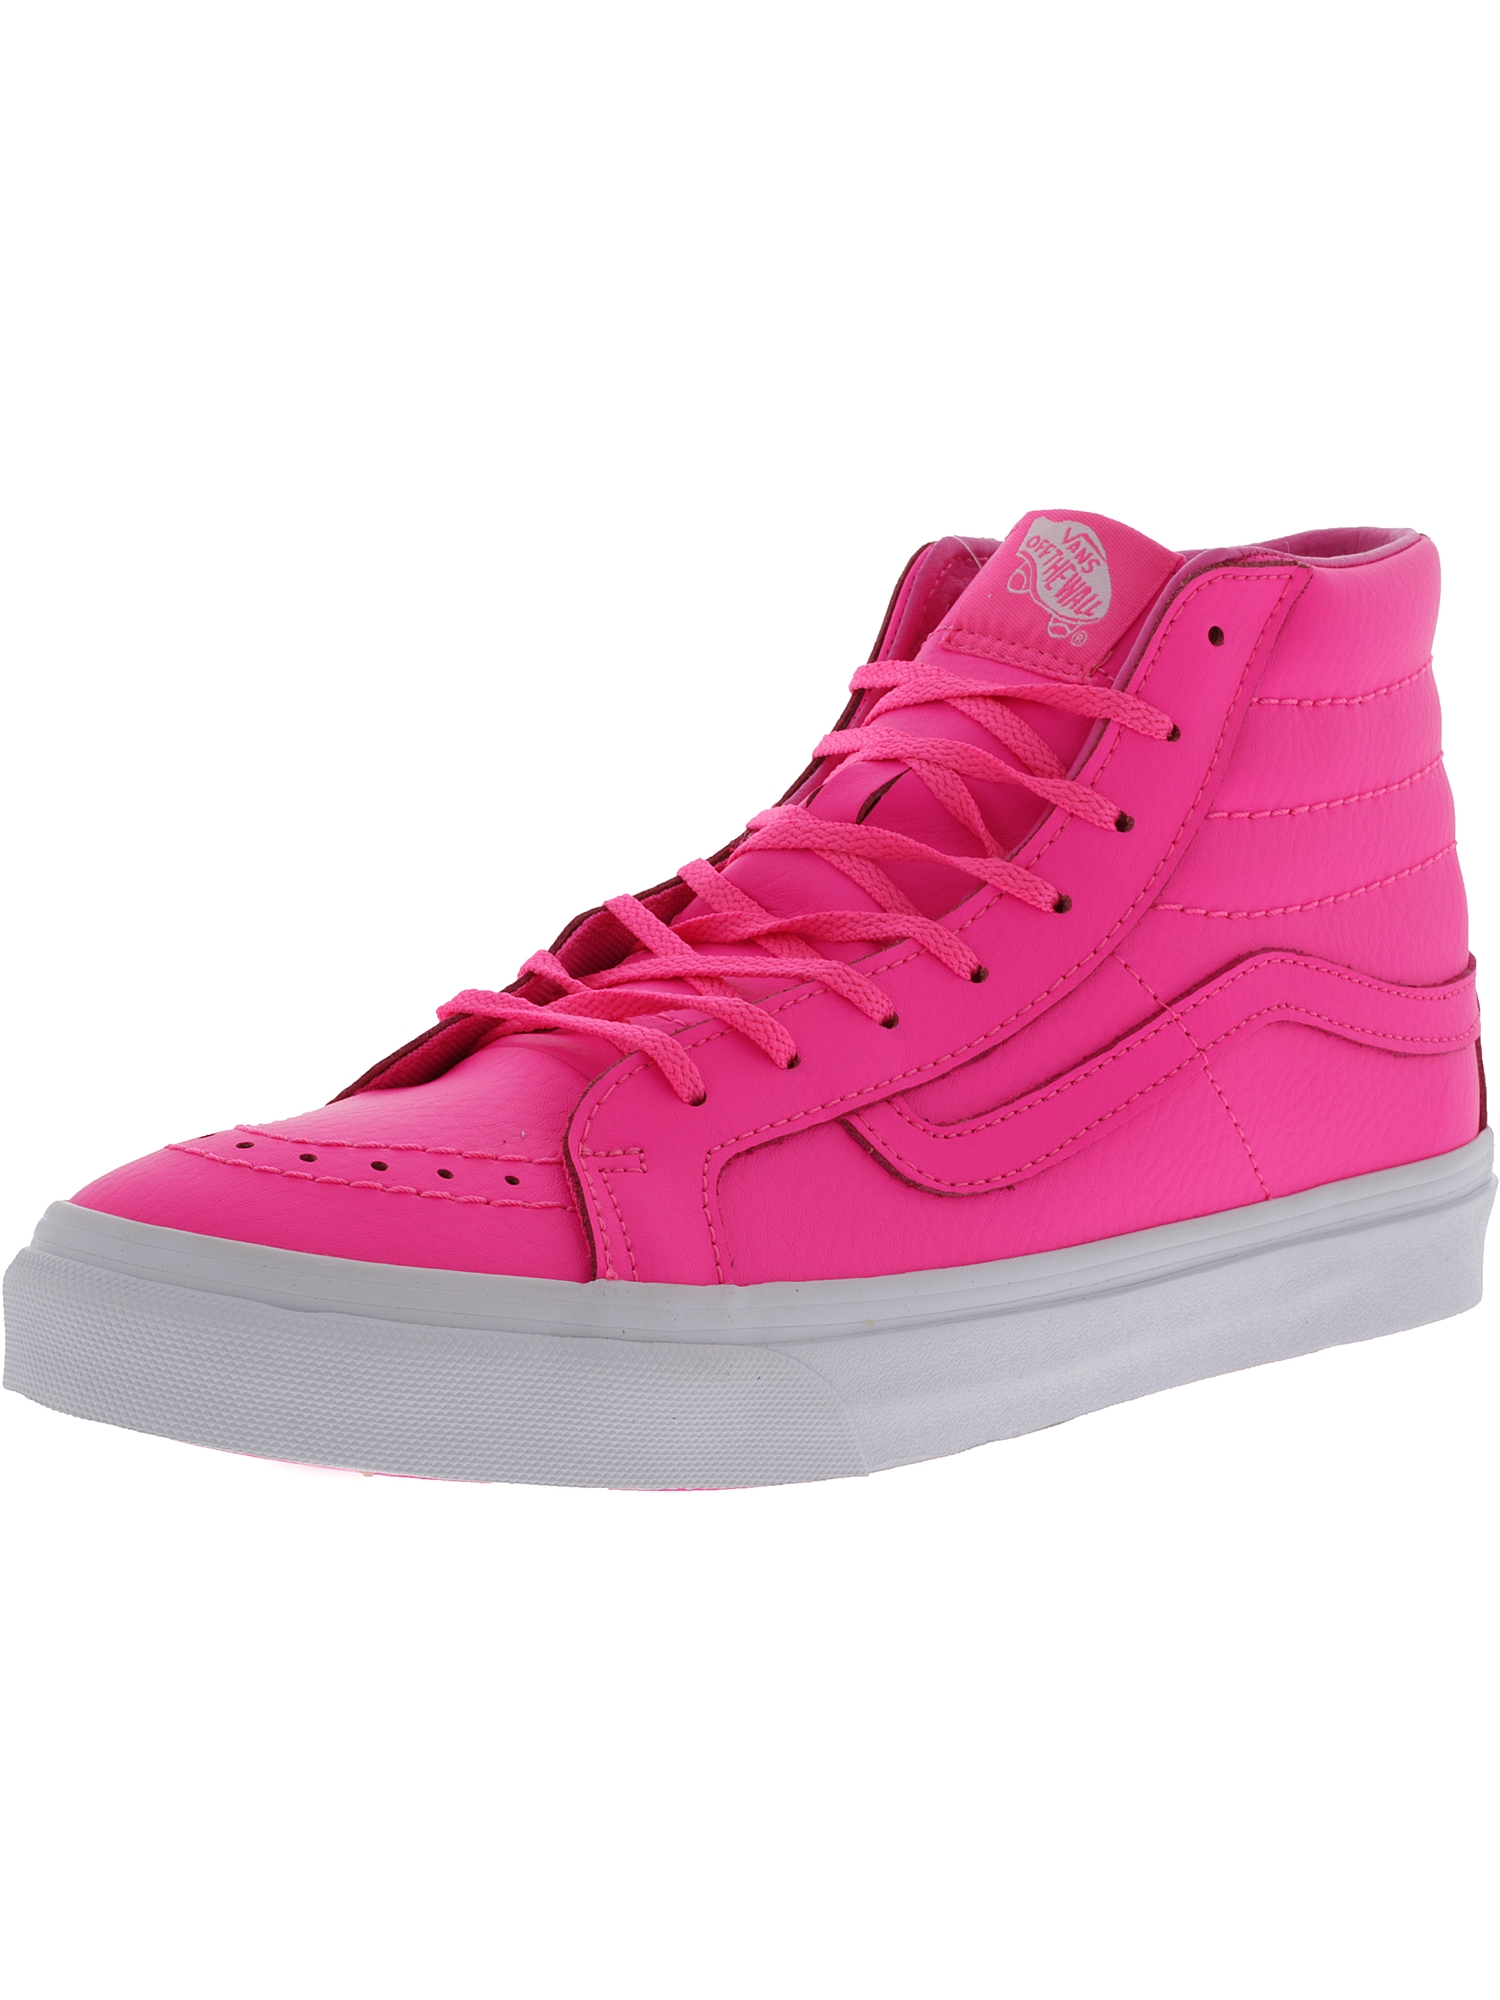 Vans Sk8-Hi Slim Neon Leather Pink High-Top Skateboarding Shoe - 7M / 5.5M - image 1 of 4